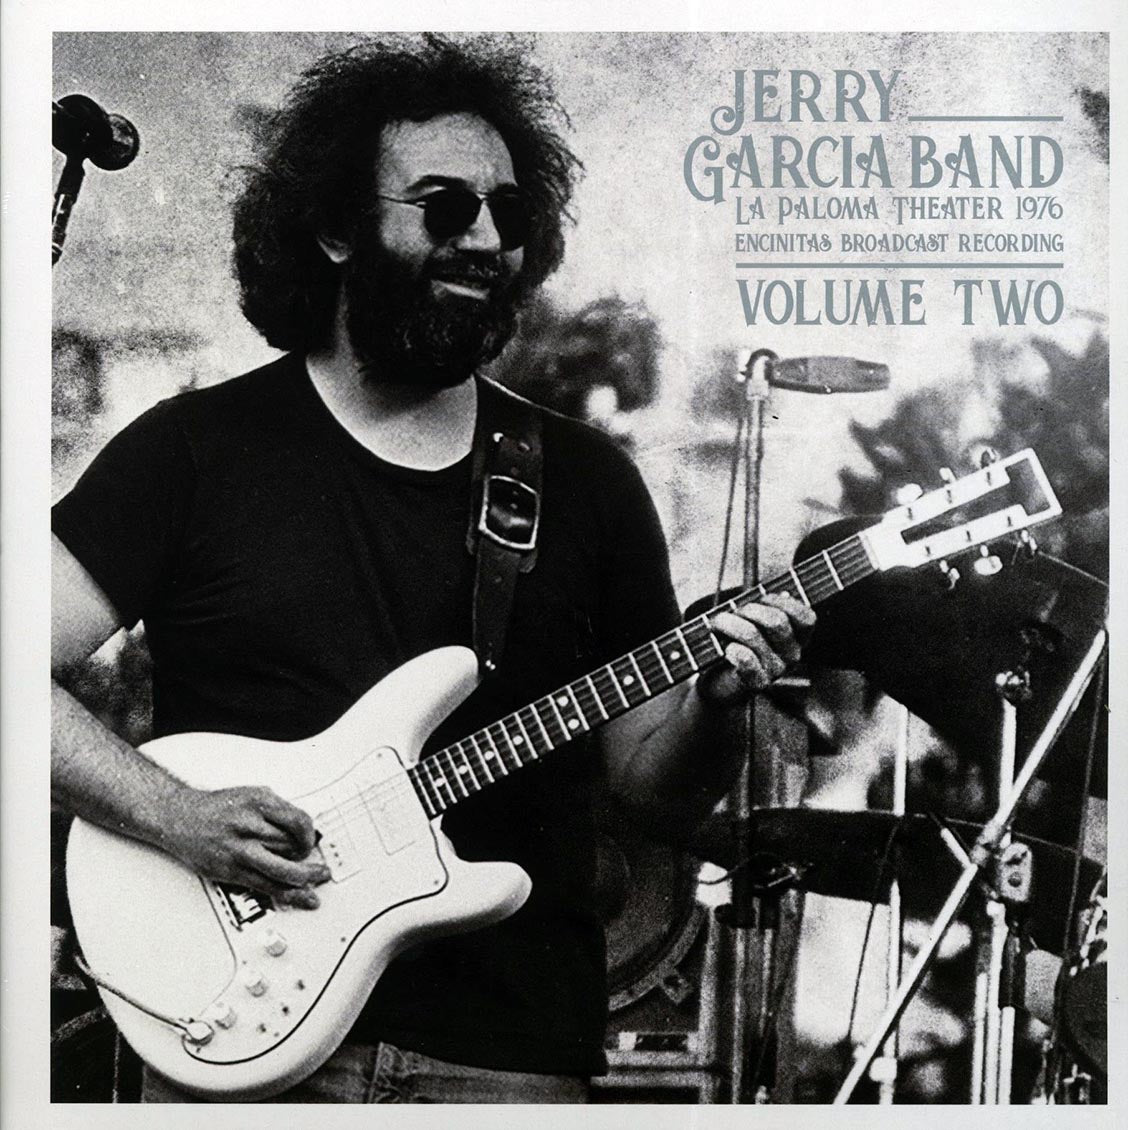 The Jerry Garcia Band - La Paloma Theater 1976 Volume 2: Encinitas Broadcast Recording